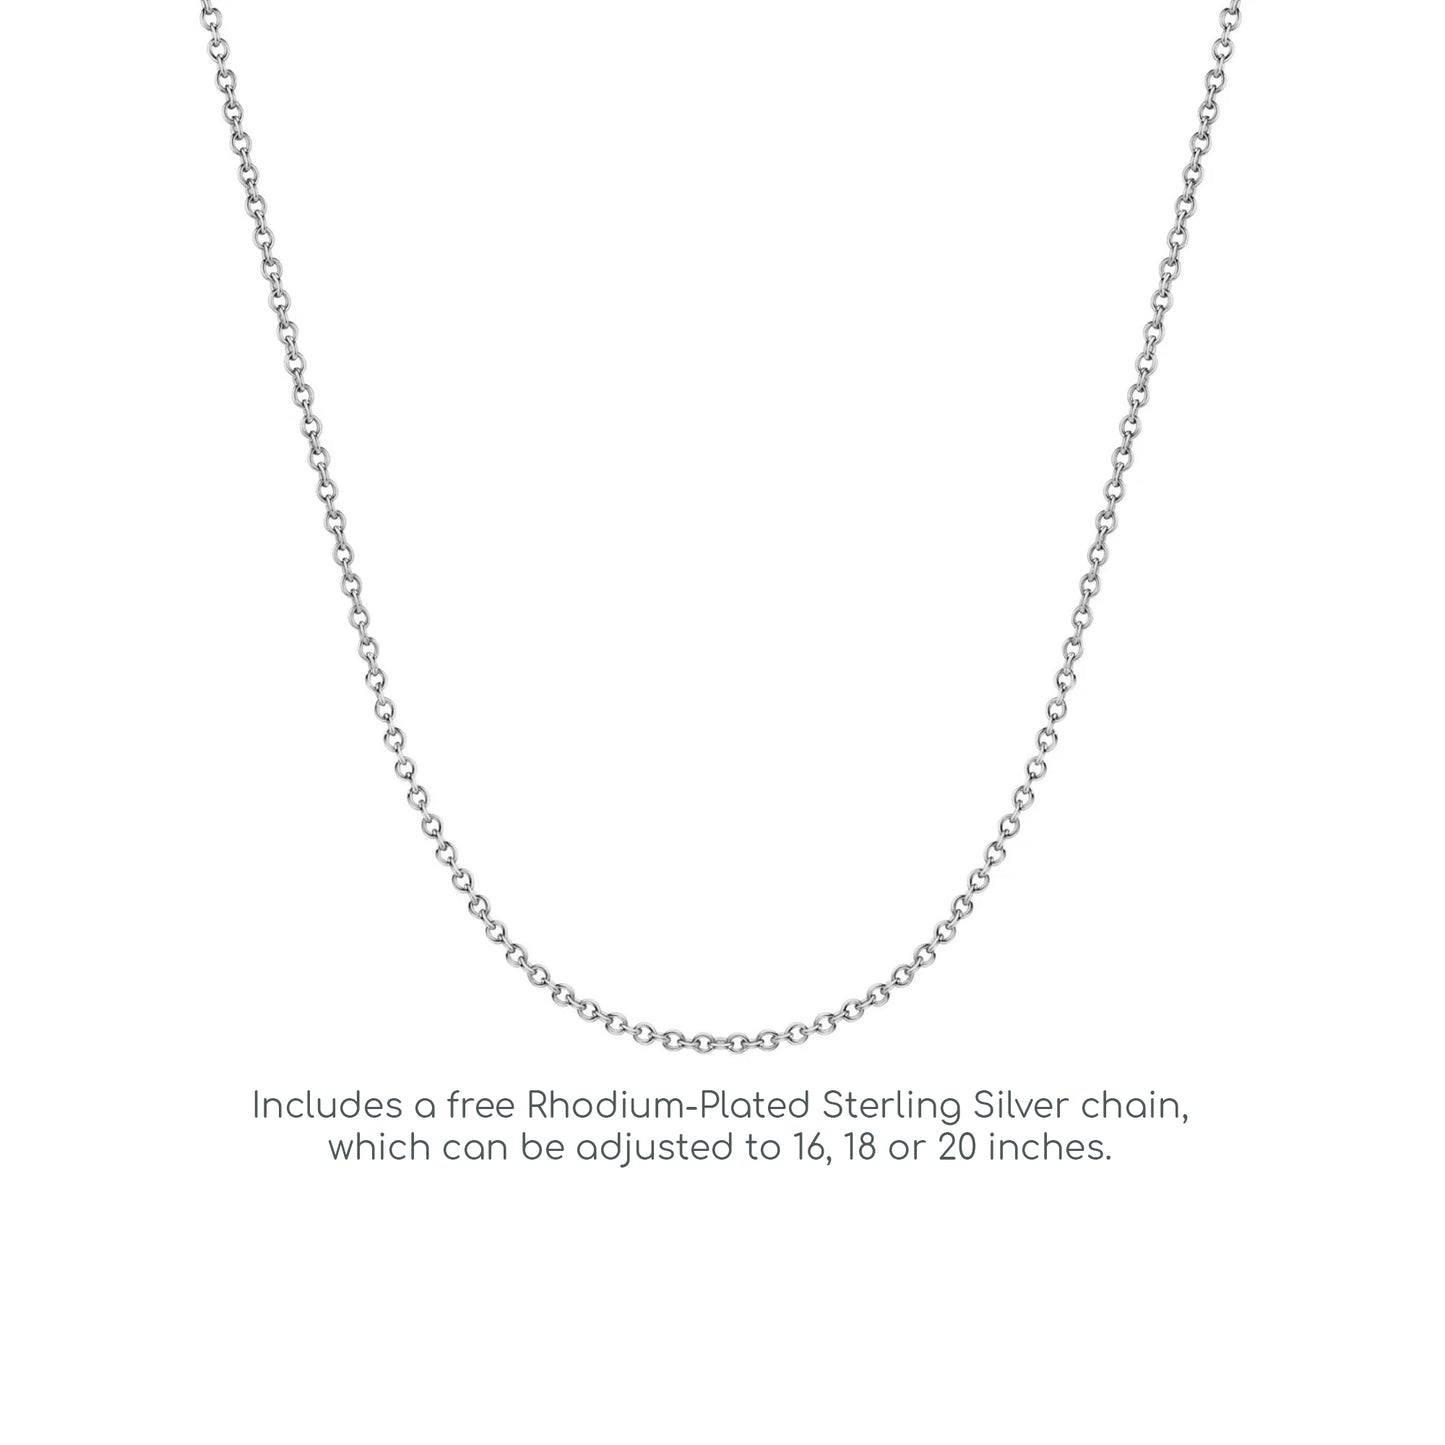 Silver  Assortment Cluster Pendant Necklace - GVP679